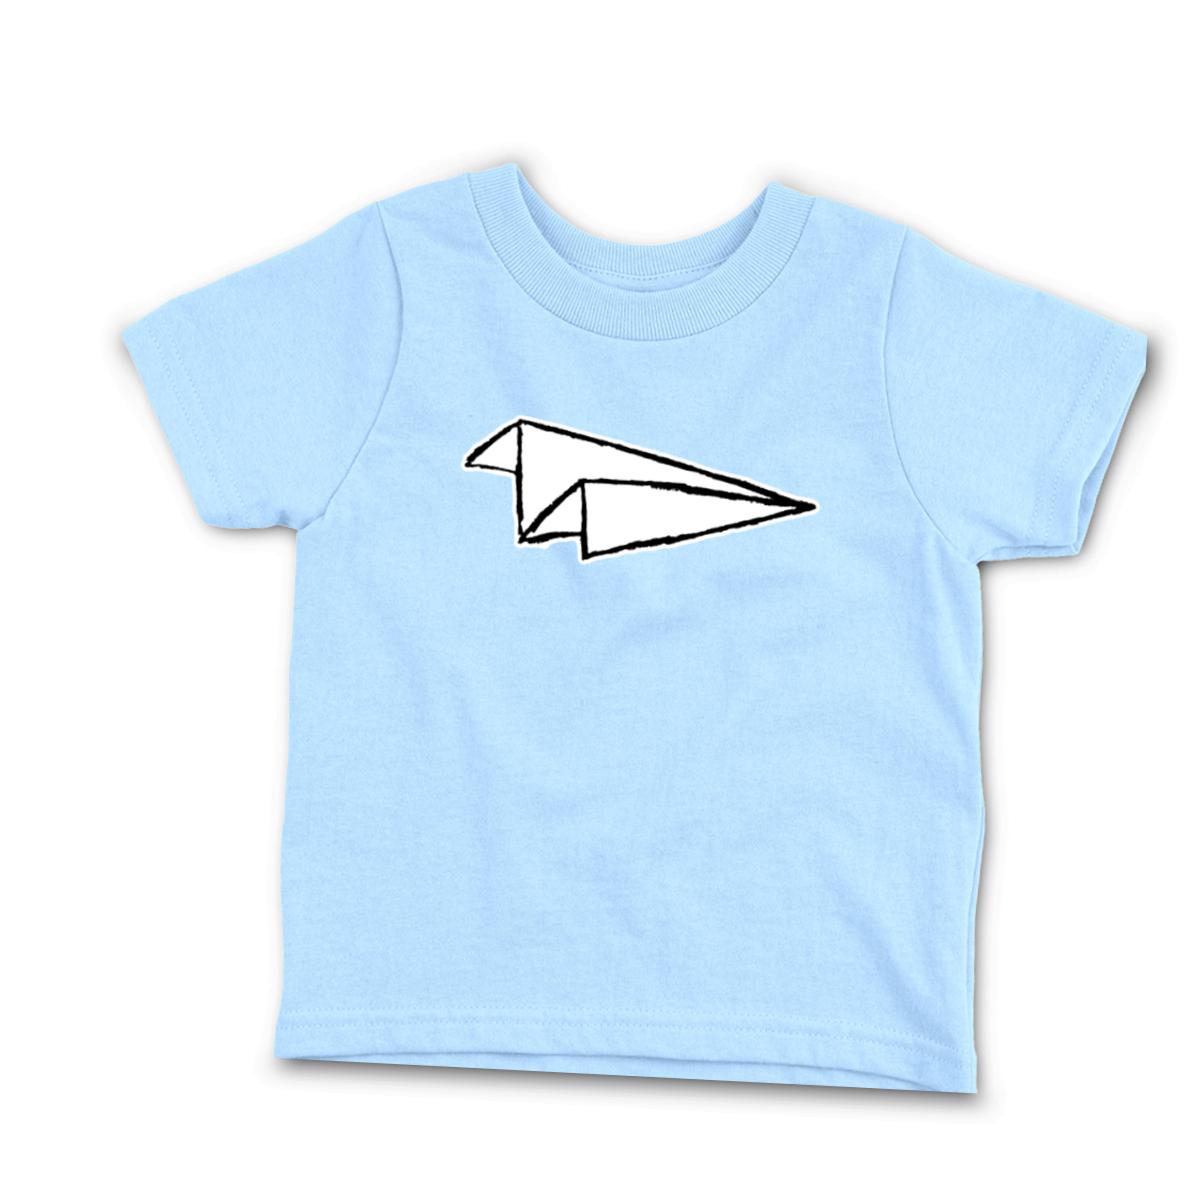 Airplane Sketch Infant Tee 18M light-blue